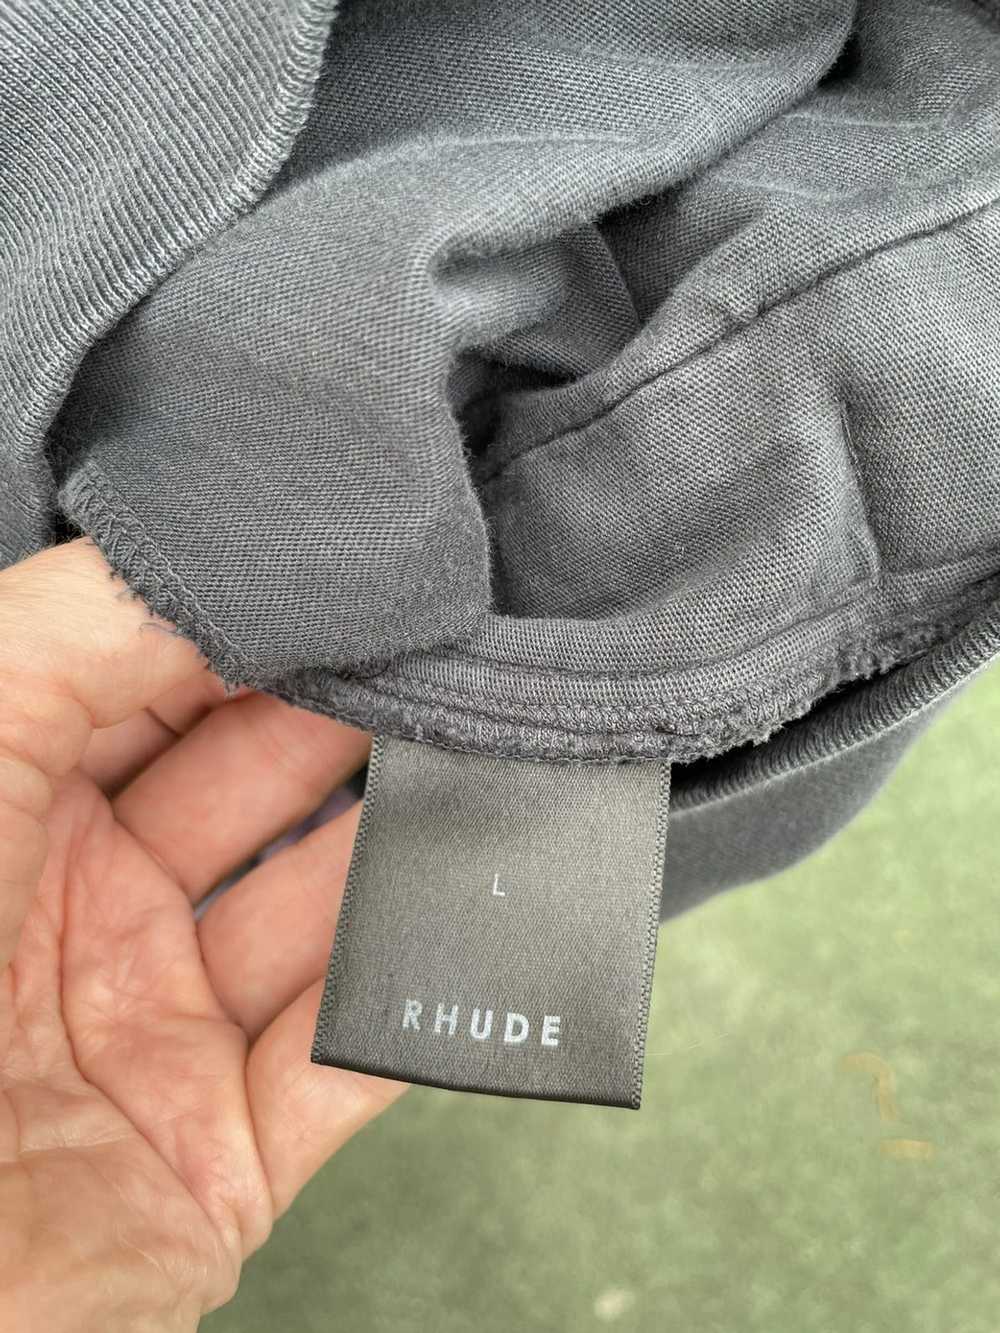 Rhude RHUDE Black Panel Crewneck Sweatshirt - image 6